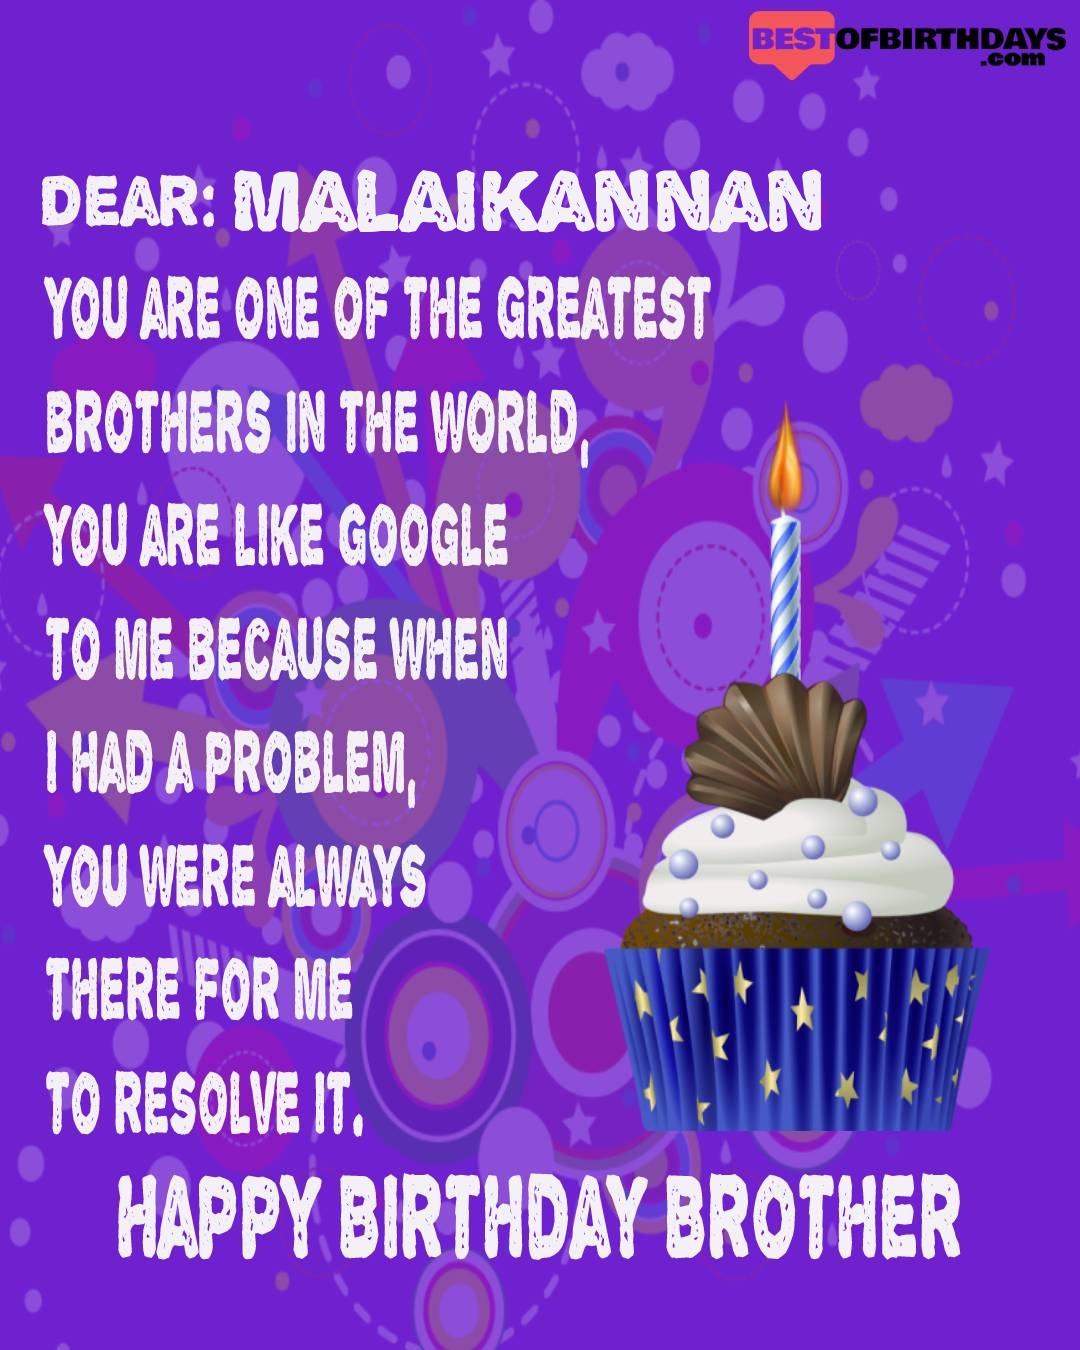 Happy birthday malaikannan bhai brother bro